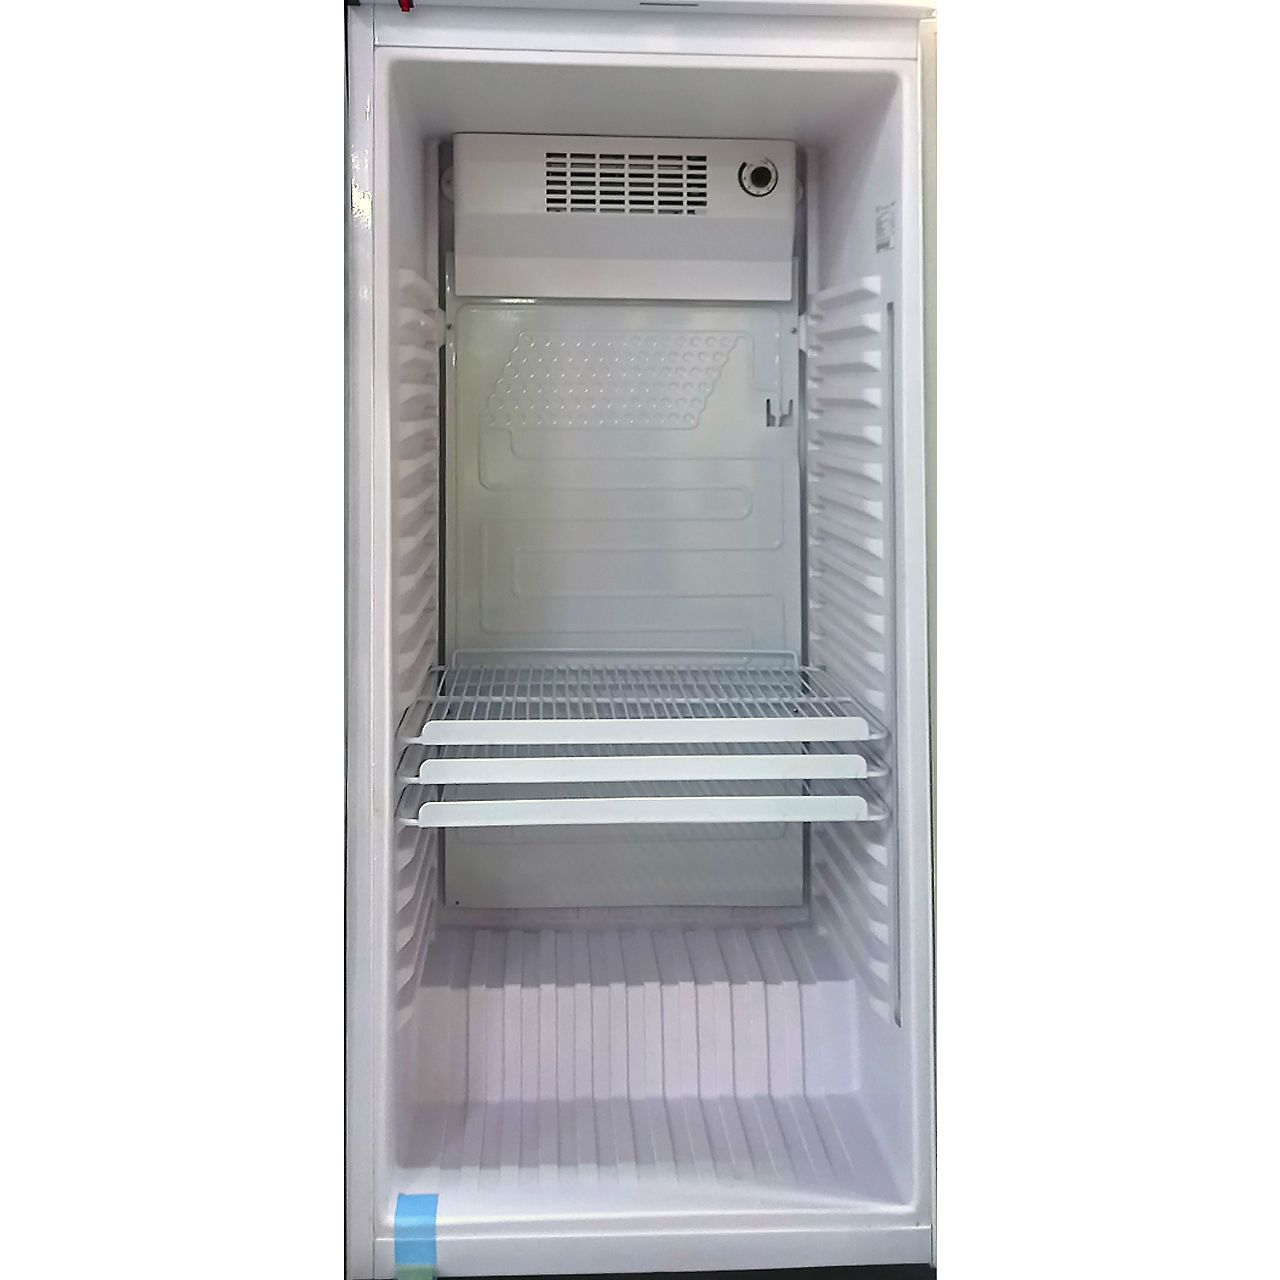 Витринный холодильник KLEO 330 литров